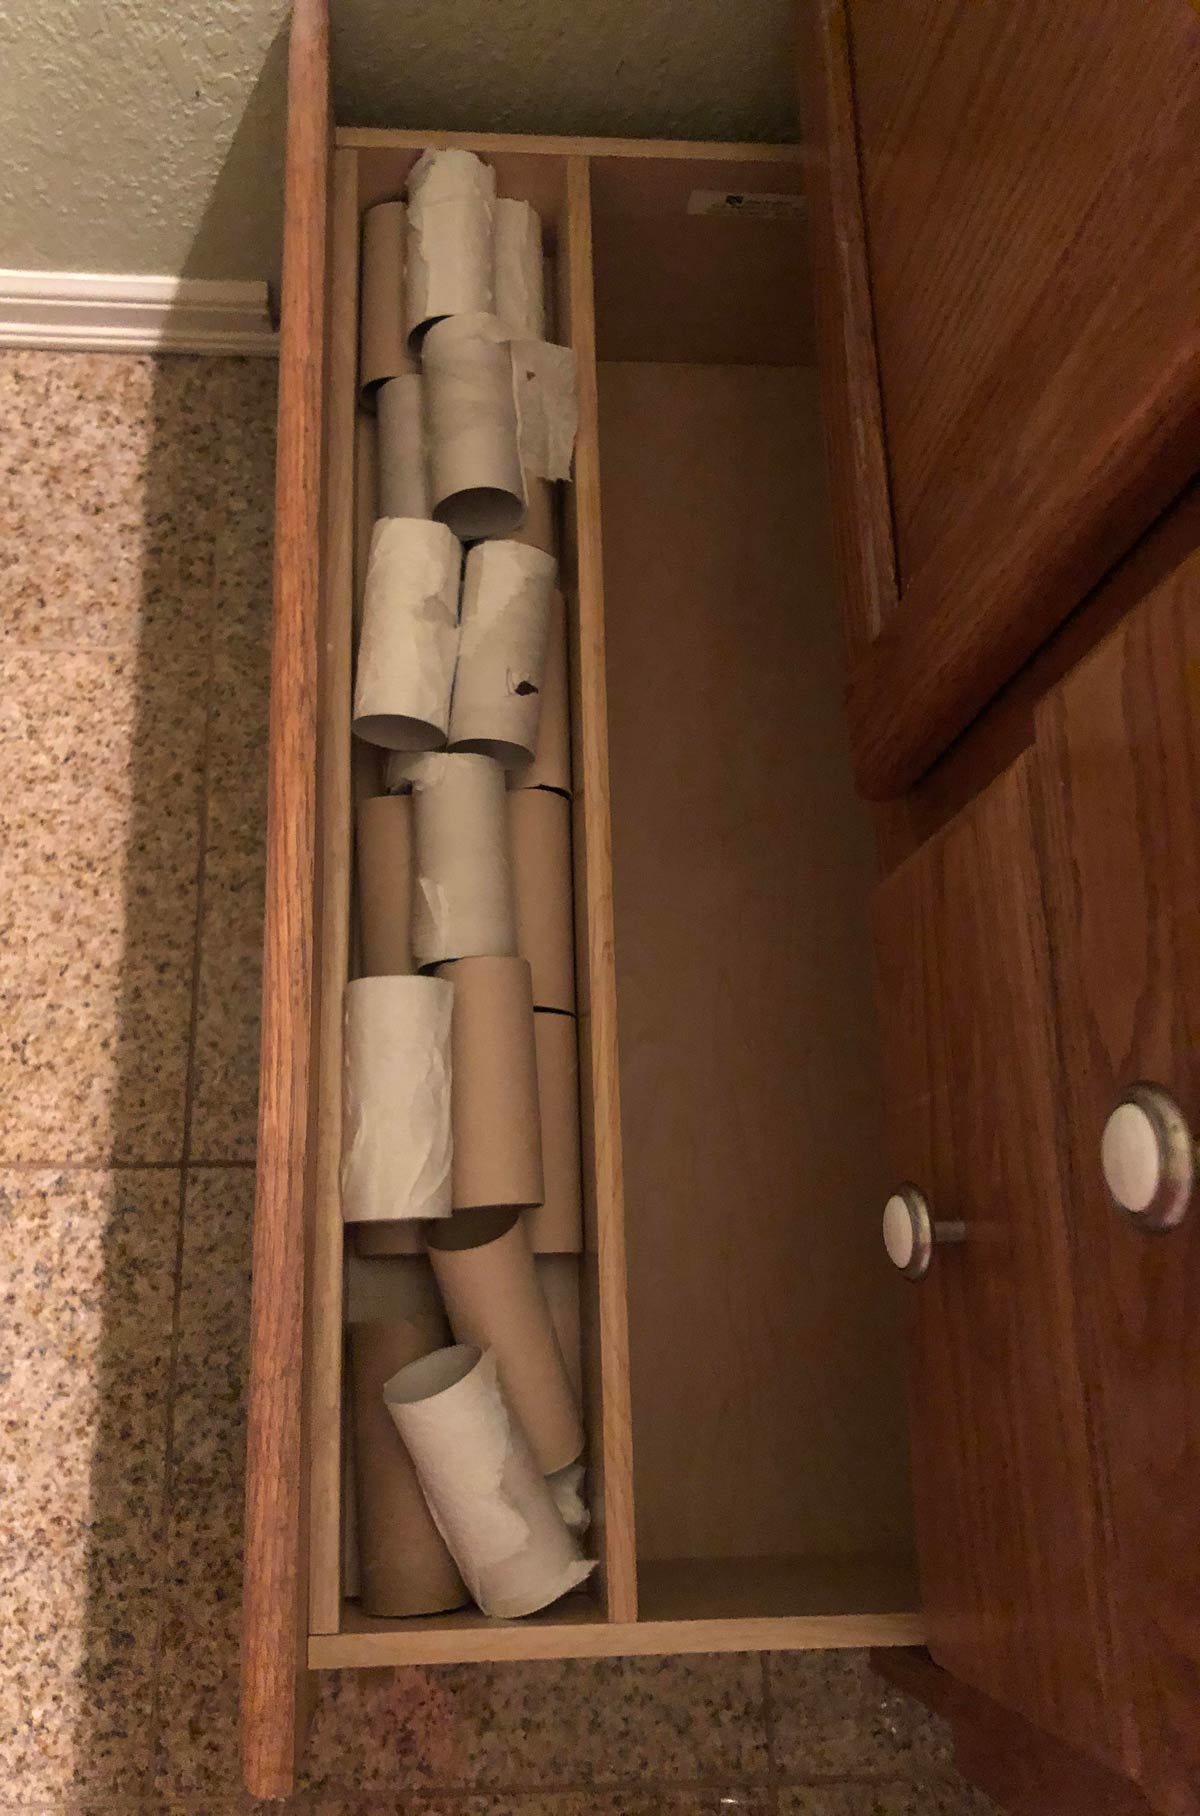 Went to change the toilet paper in my boyfriend's bathroom